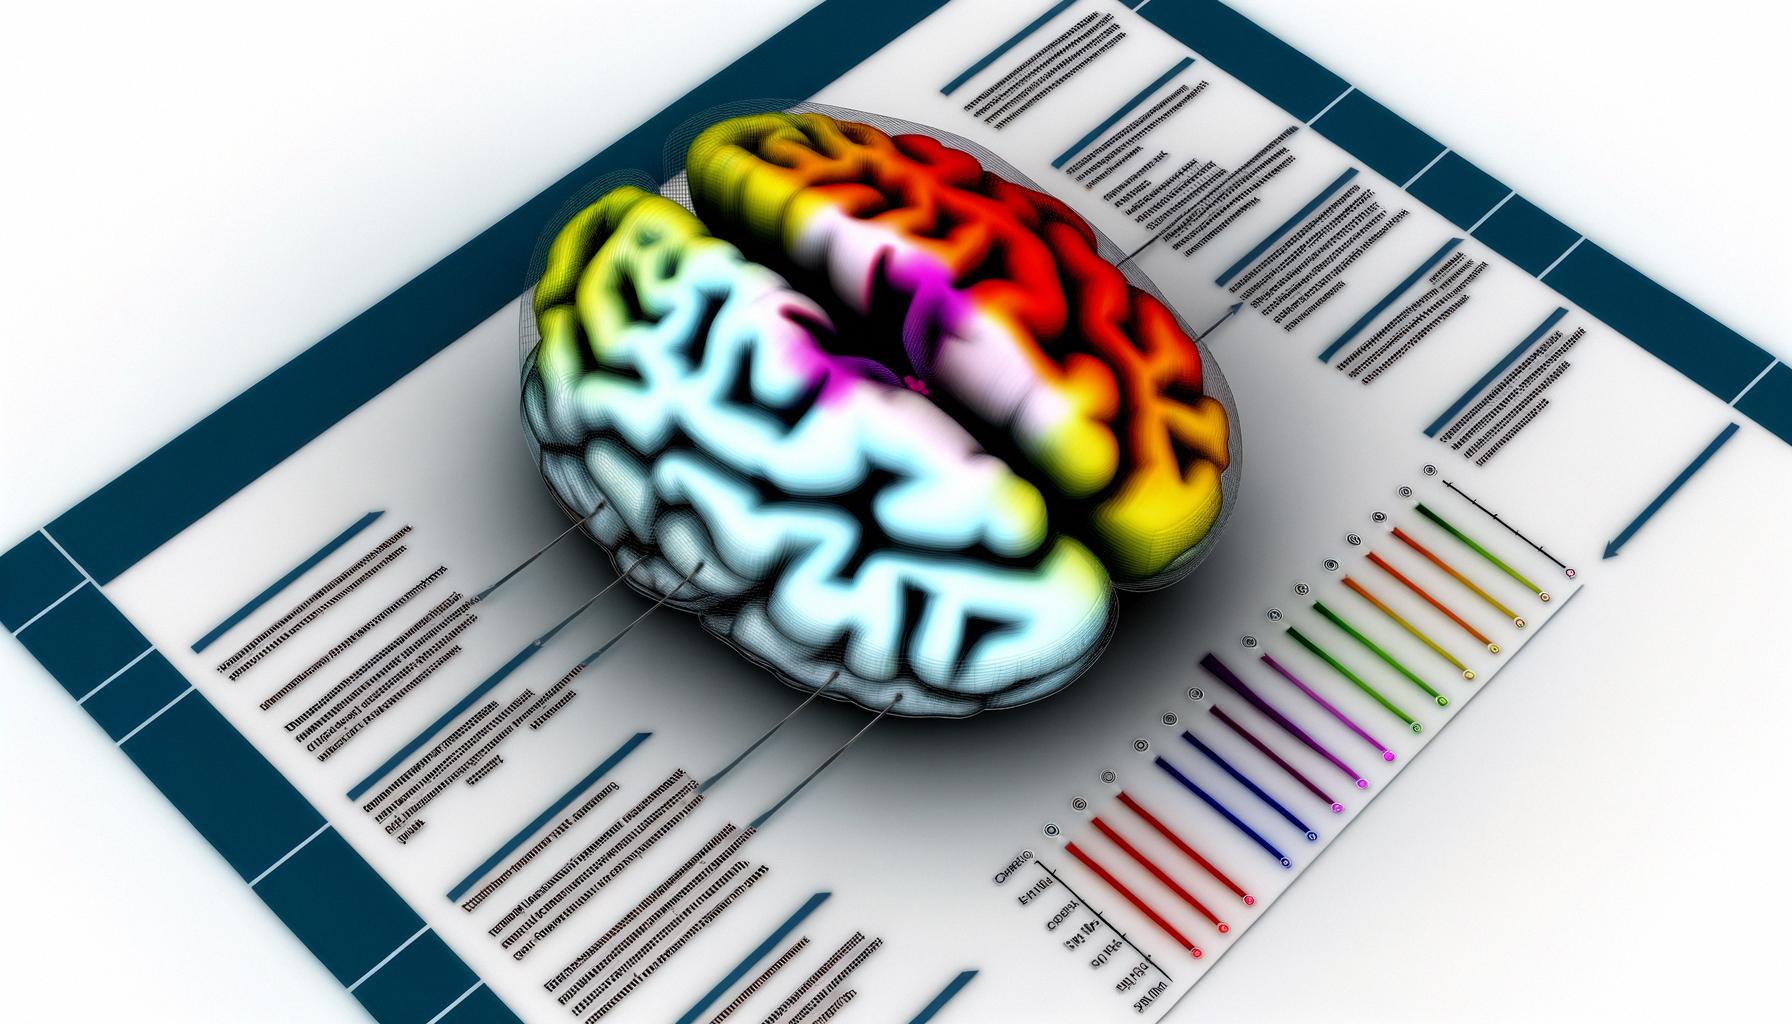 New brain imaging advancements improve understanding of development and disorders Balanced News